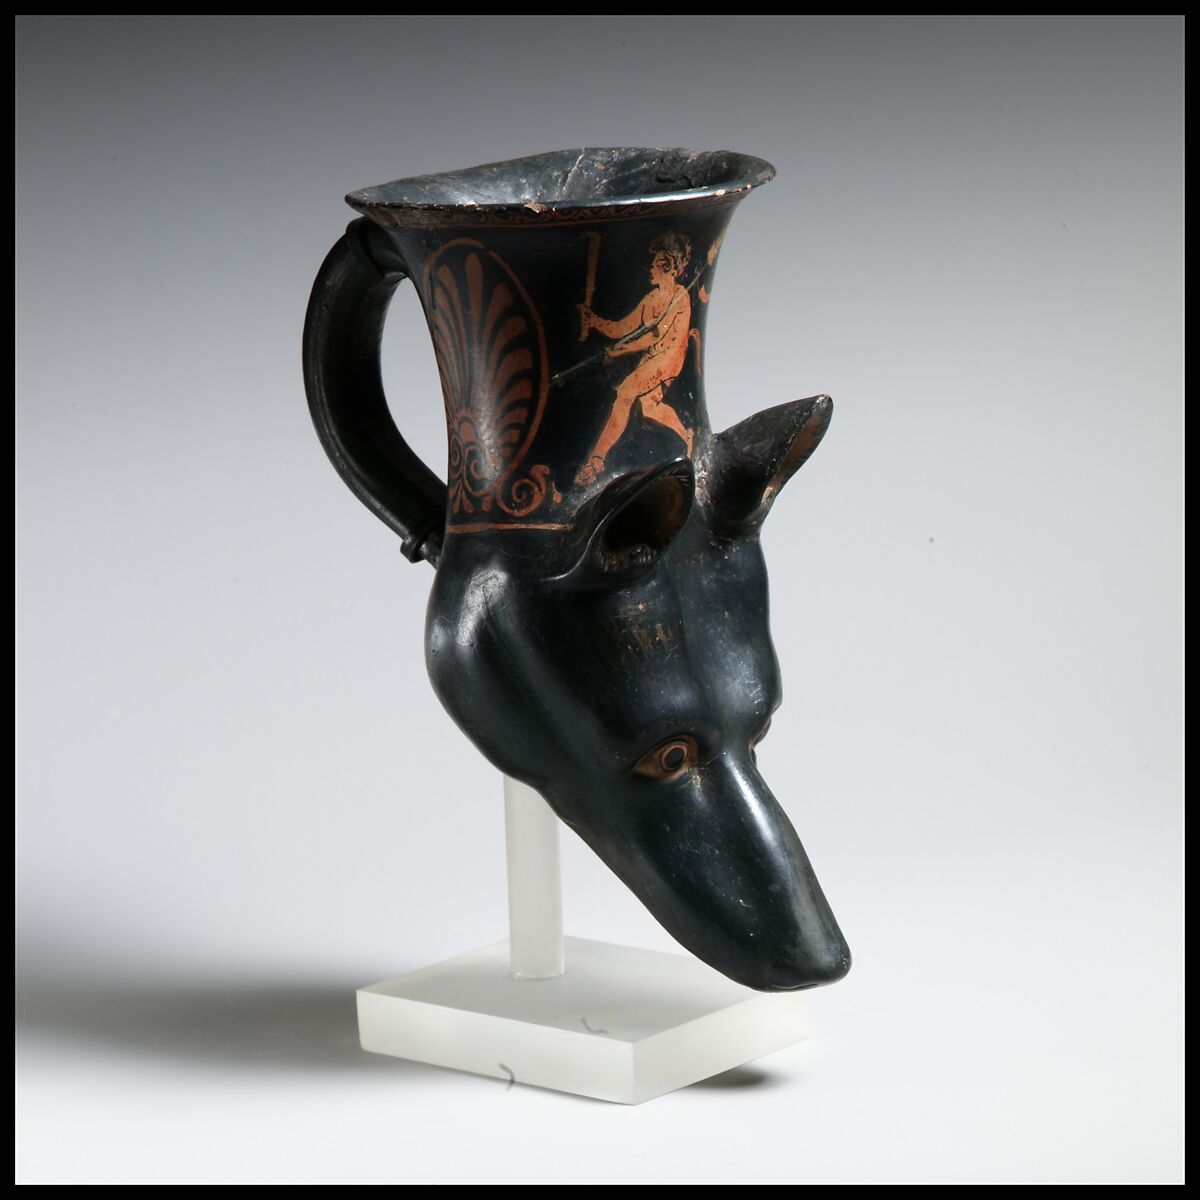 Terracotta rhyton (vase for libations or drinking), Terracotta, Greek, South Italian, Apulian 